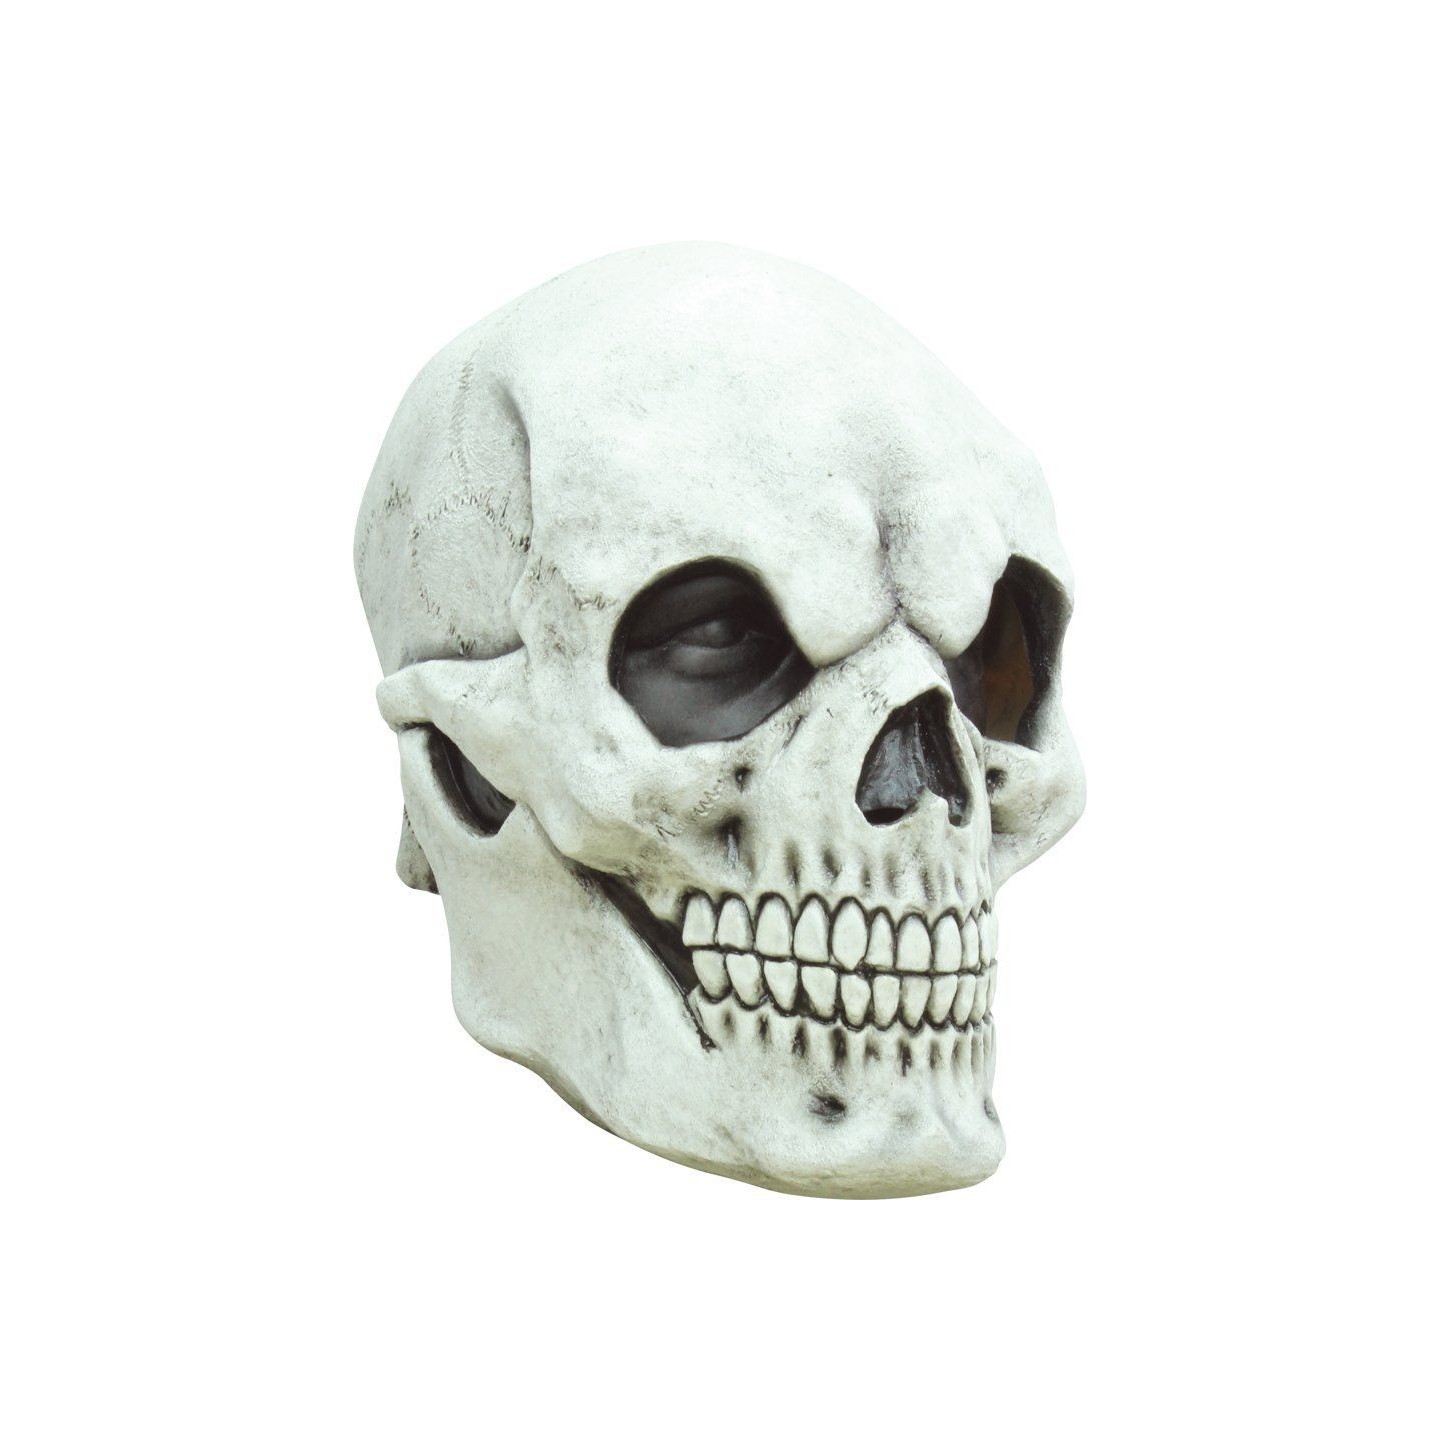 enge Halloween skelet masker doodskop doodshoofd